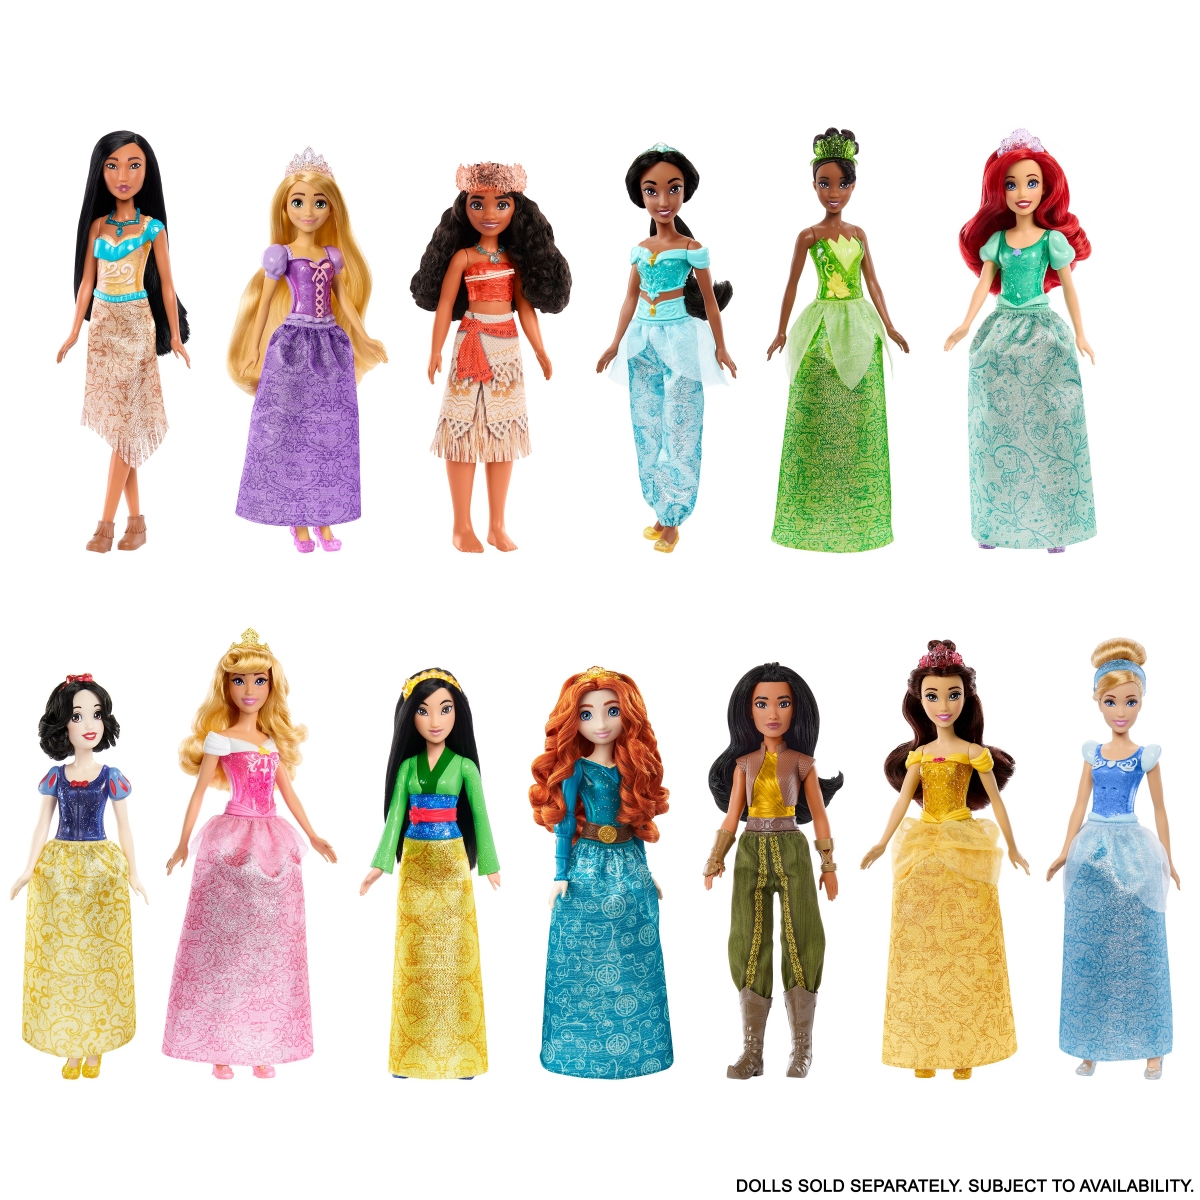 Disney Princess Fashion Core Doll Asst. Rapunzel Lelle HLW03